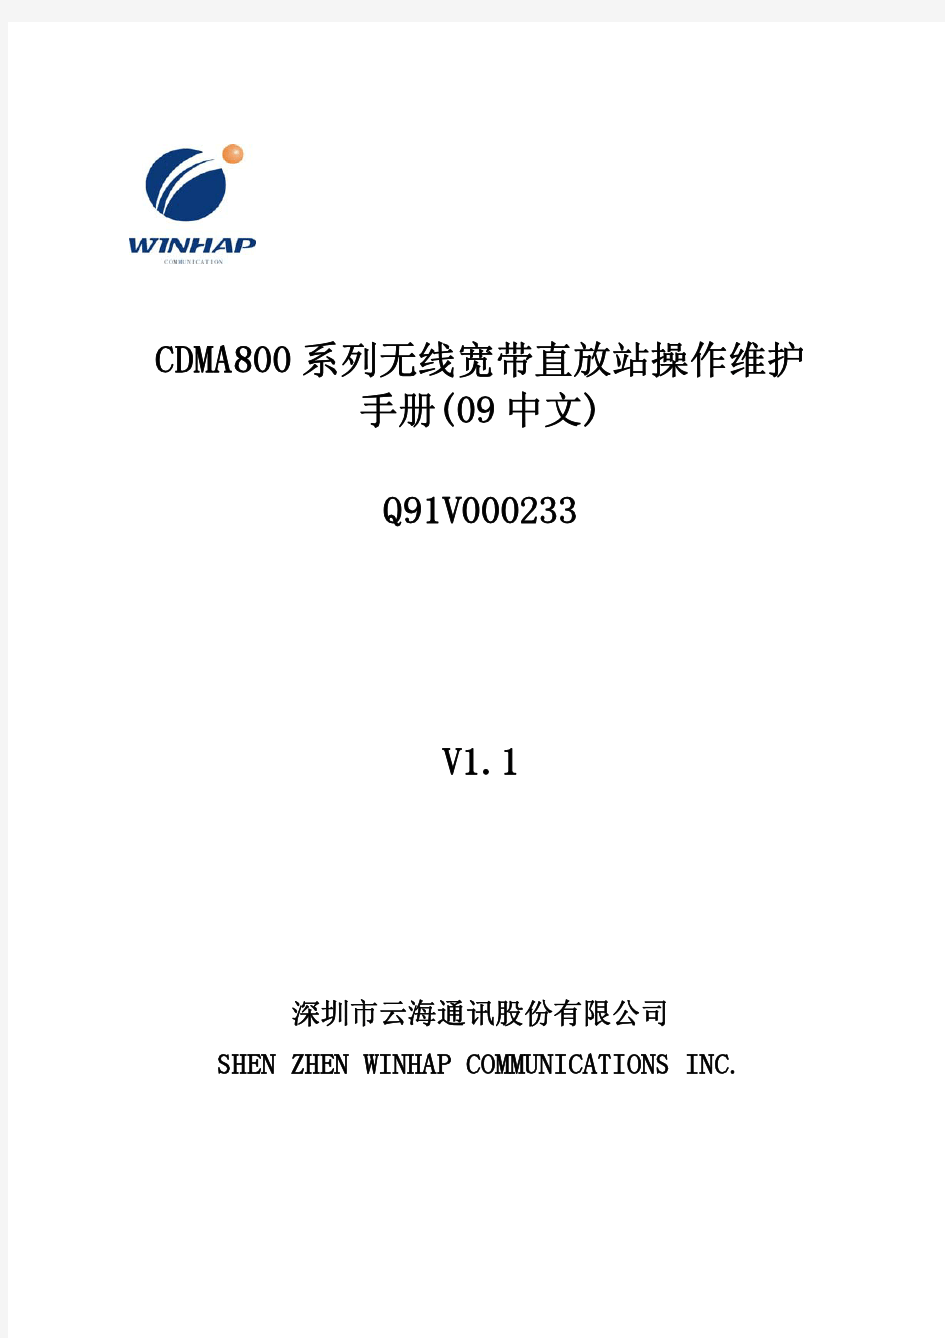 Q91V000233 V1.1 CDMA800系列无线宽带直放站操作维护手册(09中文)